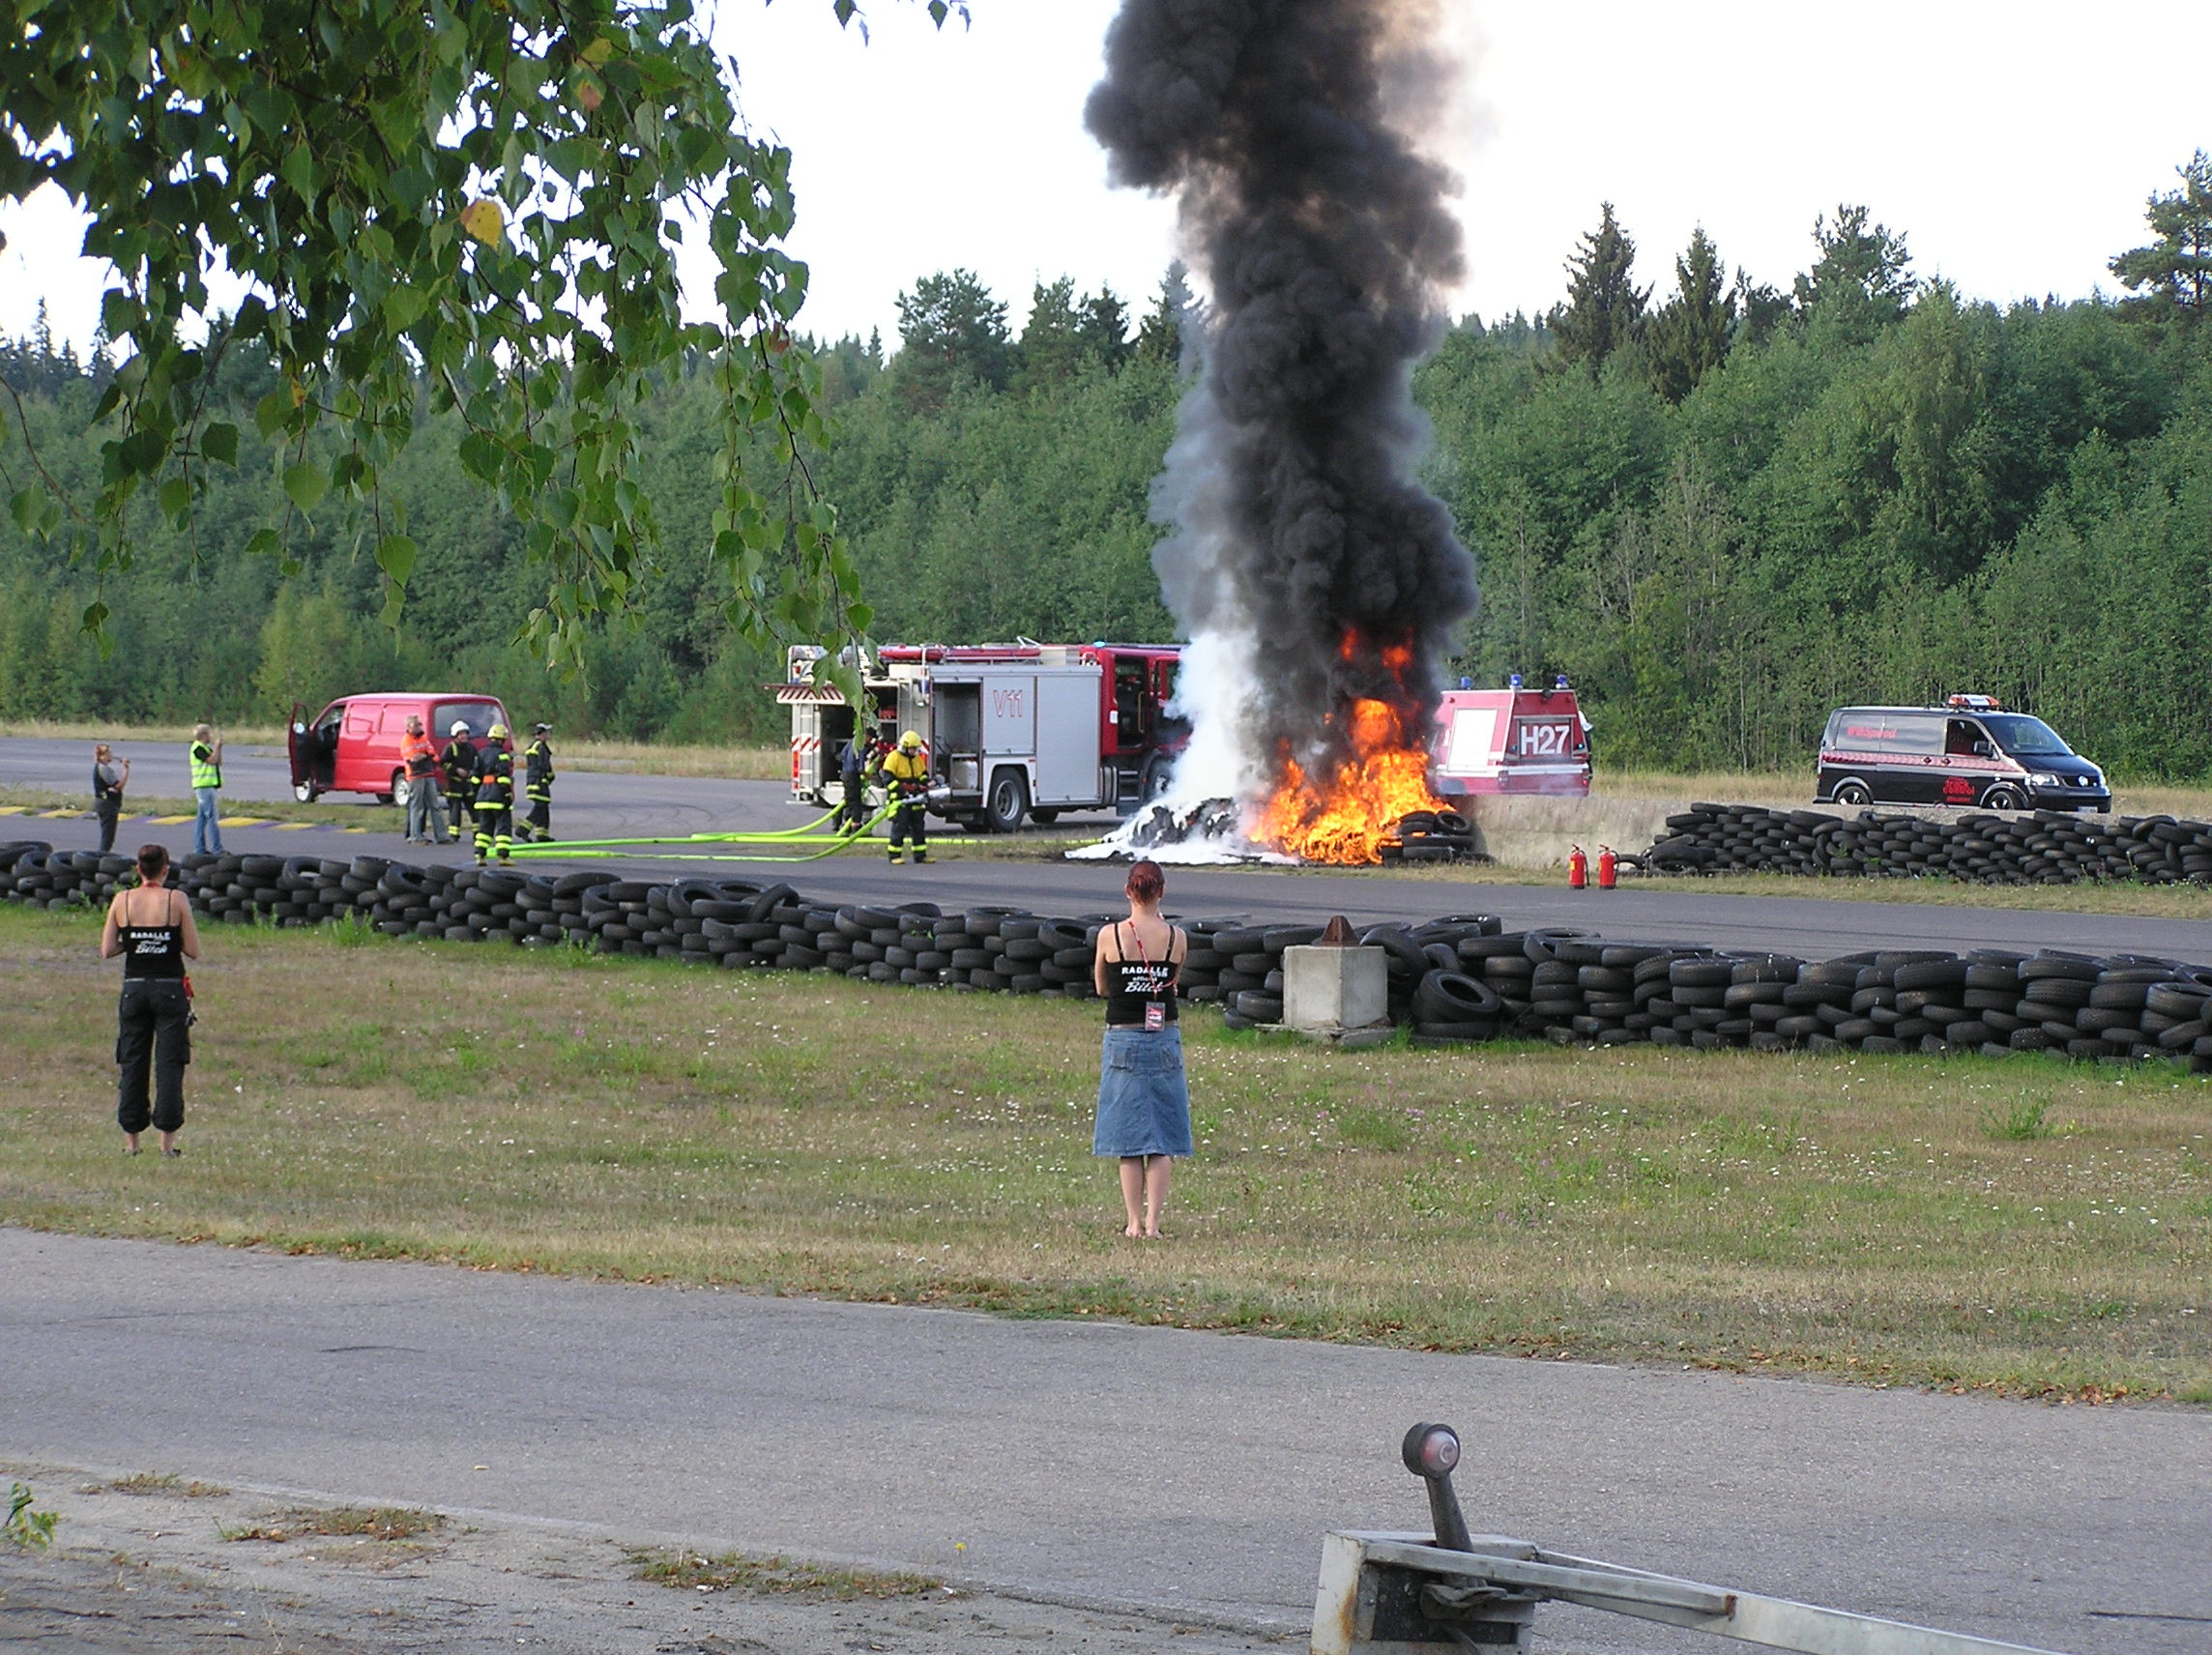 26.8.2006  radalle.com RatapÃ¤ivÃ¤, Motopark, TyttÃ¶jen mÃ¤Ã¤rÃ¤ lÃ¤hti lisÃ¤Ã¤ntymÃ¤Ã¤n palomiesten saavuttua